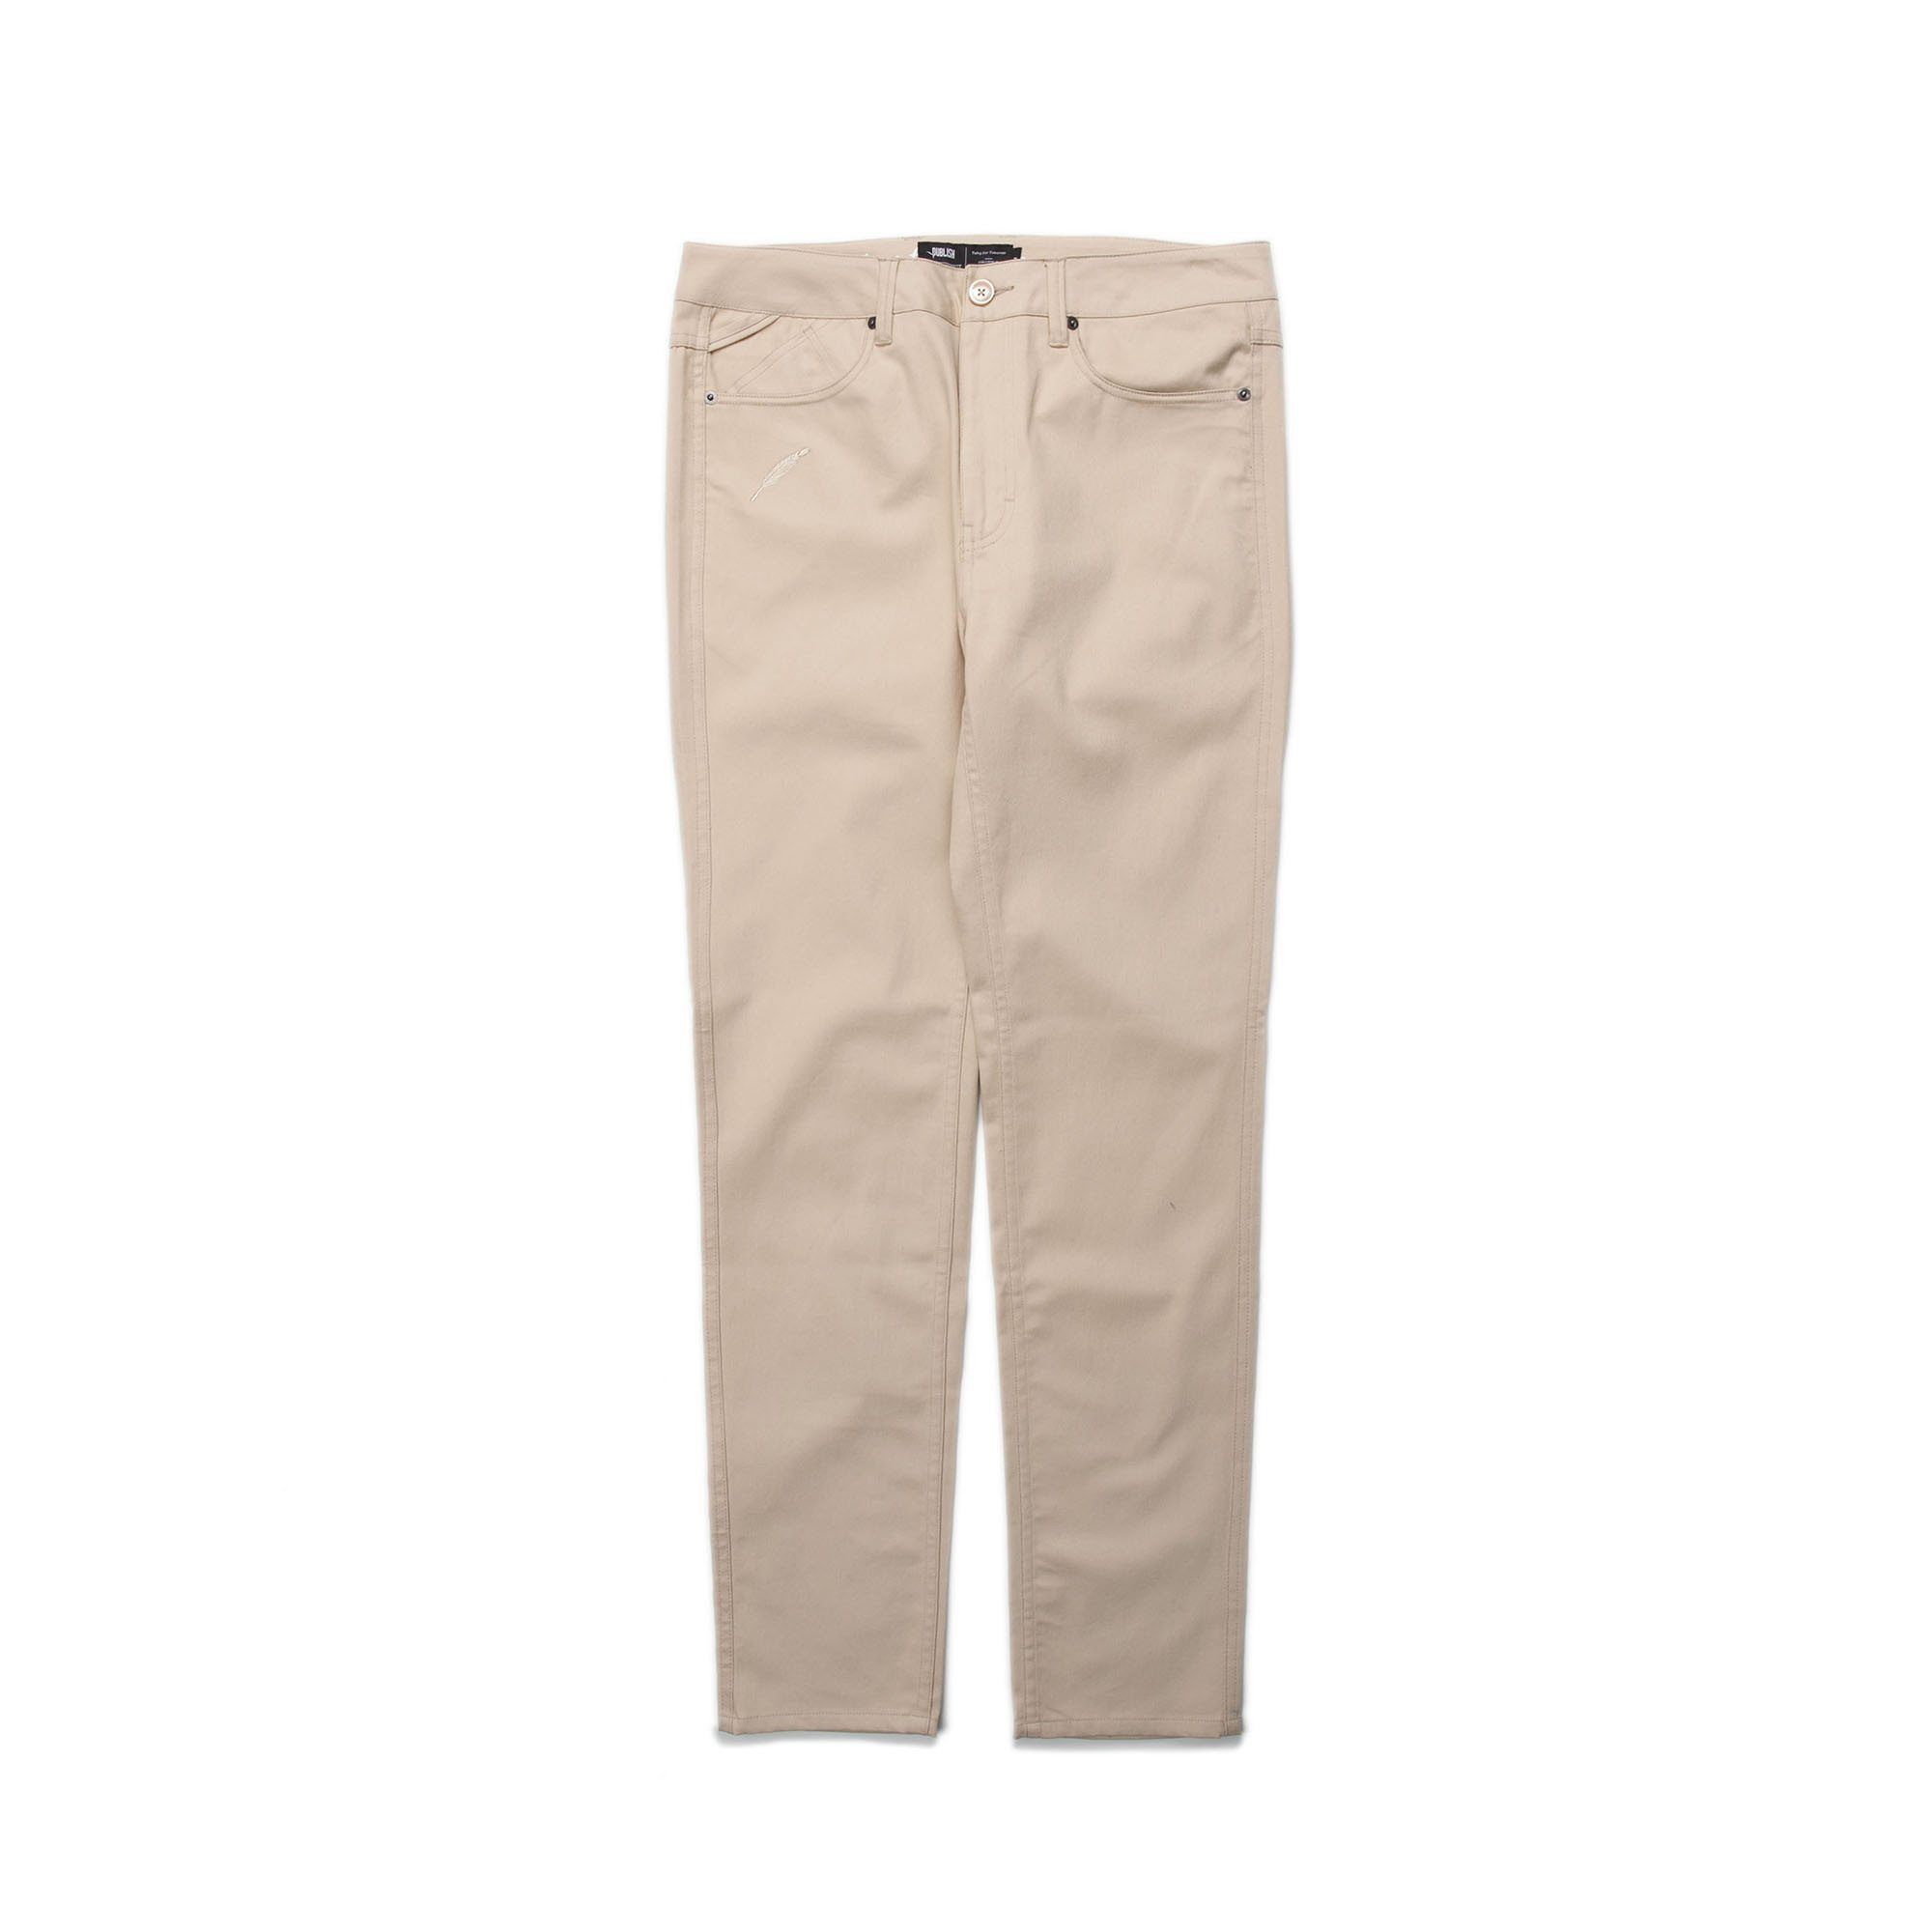 PANTS - Publish Index Slim Classic Buttom Khaki Pants P1601103-KHA